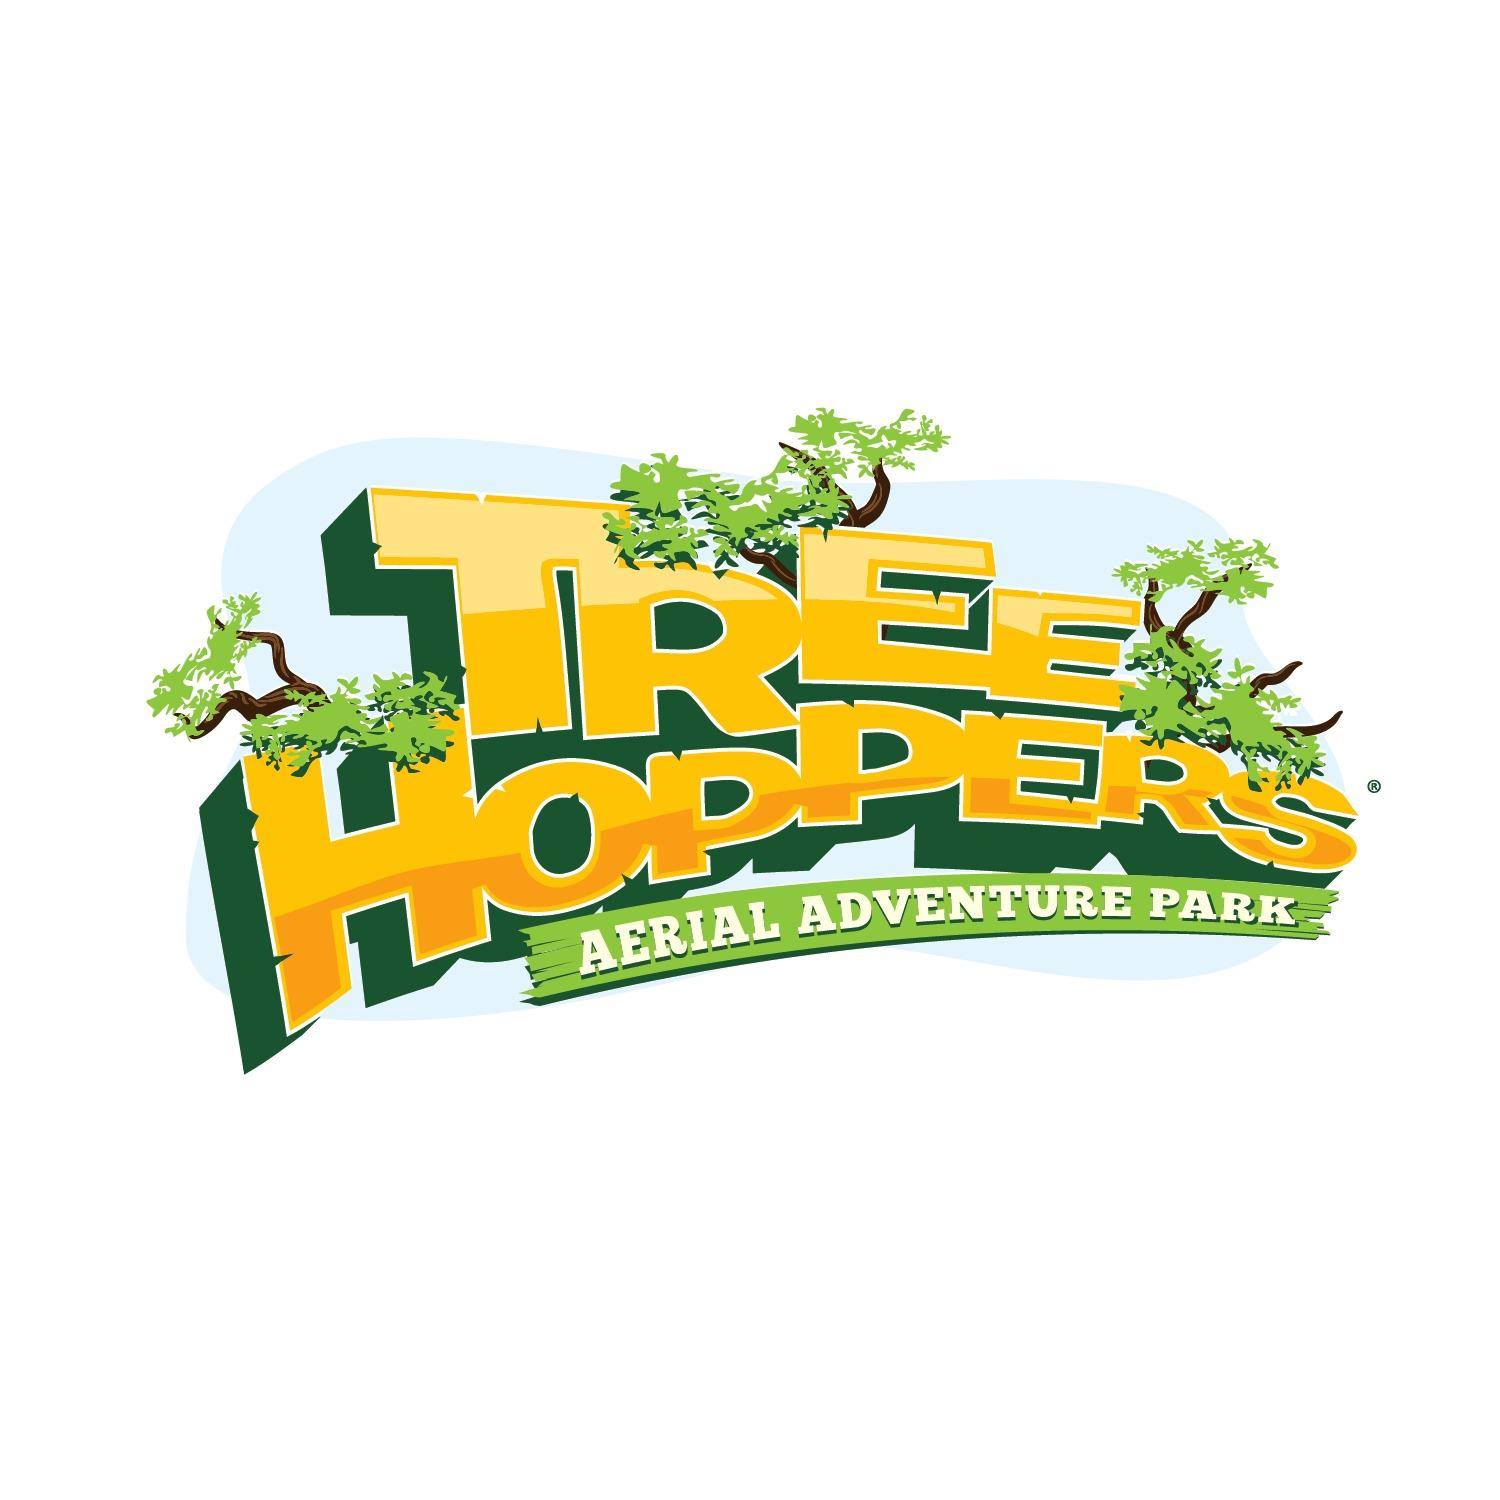 TreeHoppers Aerial Adventure Park - Logo